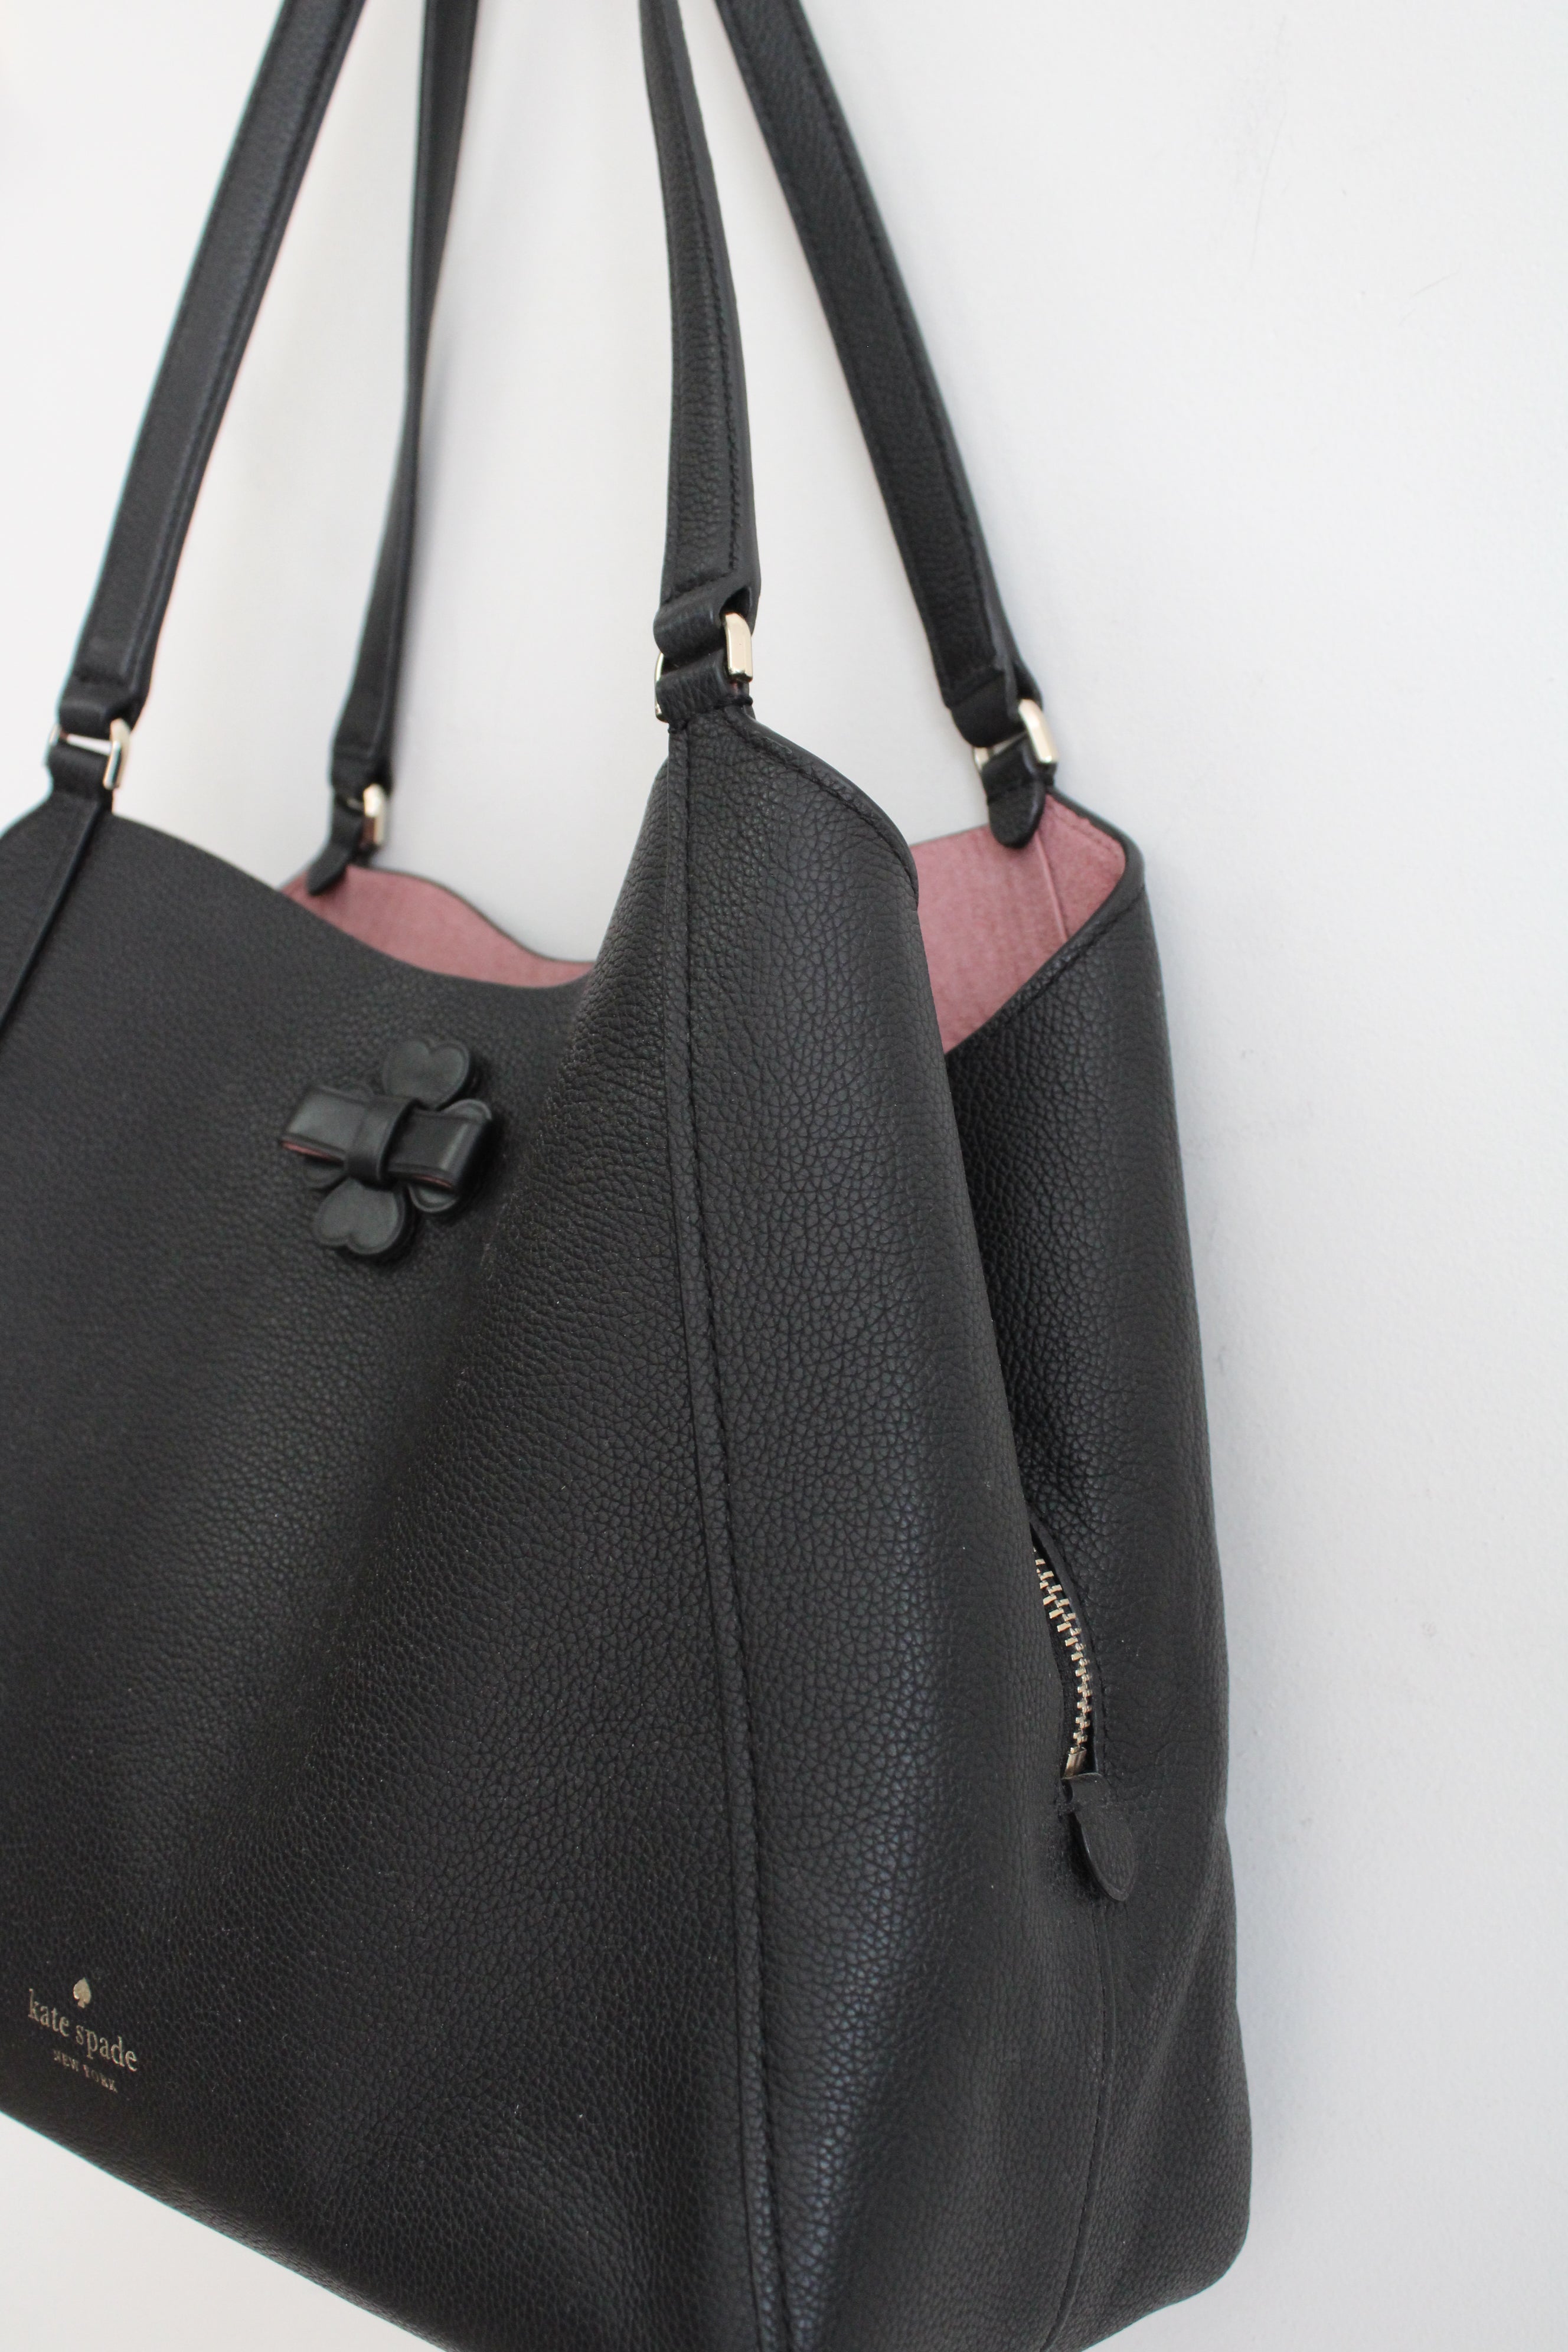 Kate Spade New York Talia Black Leather Triple Compartment Shoulder Bag